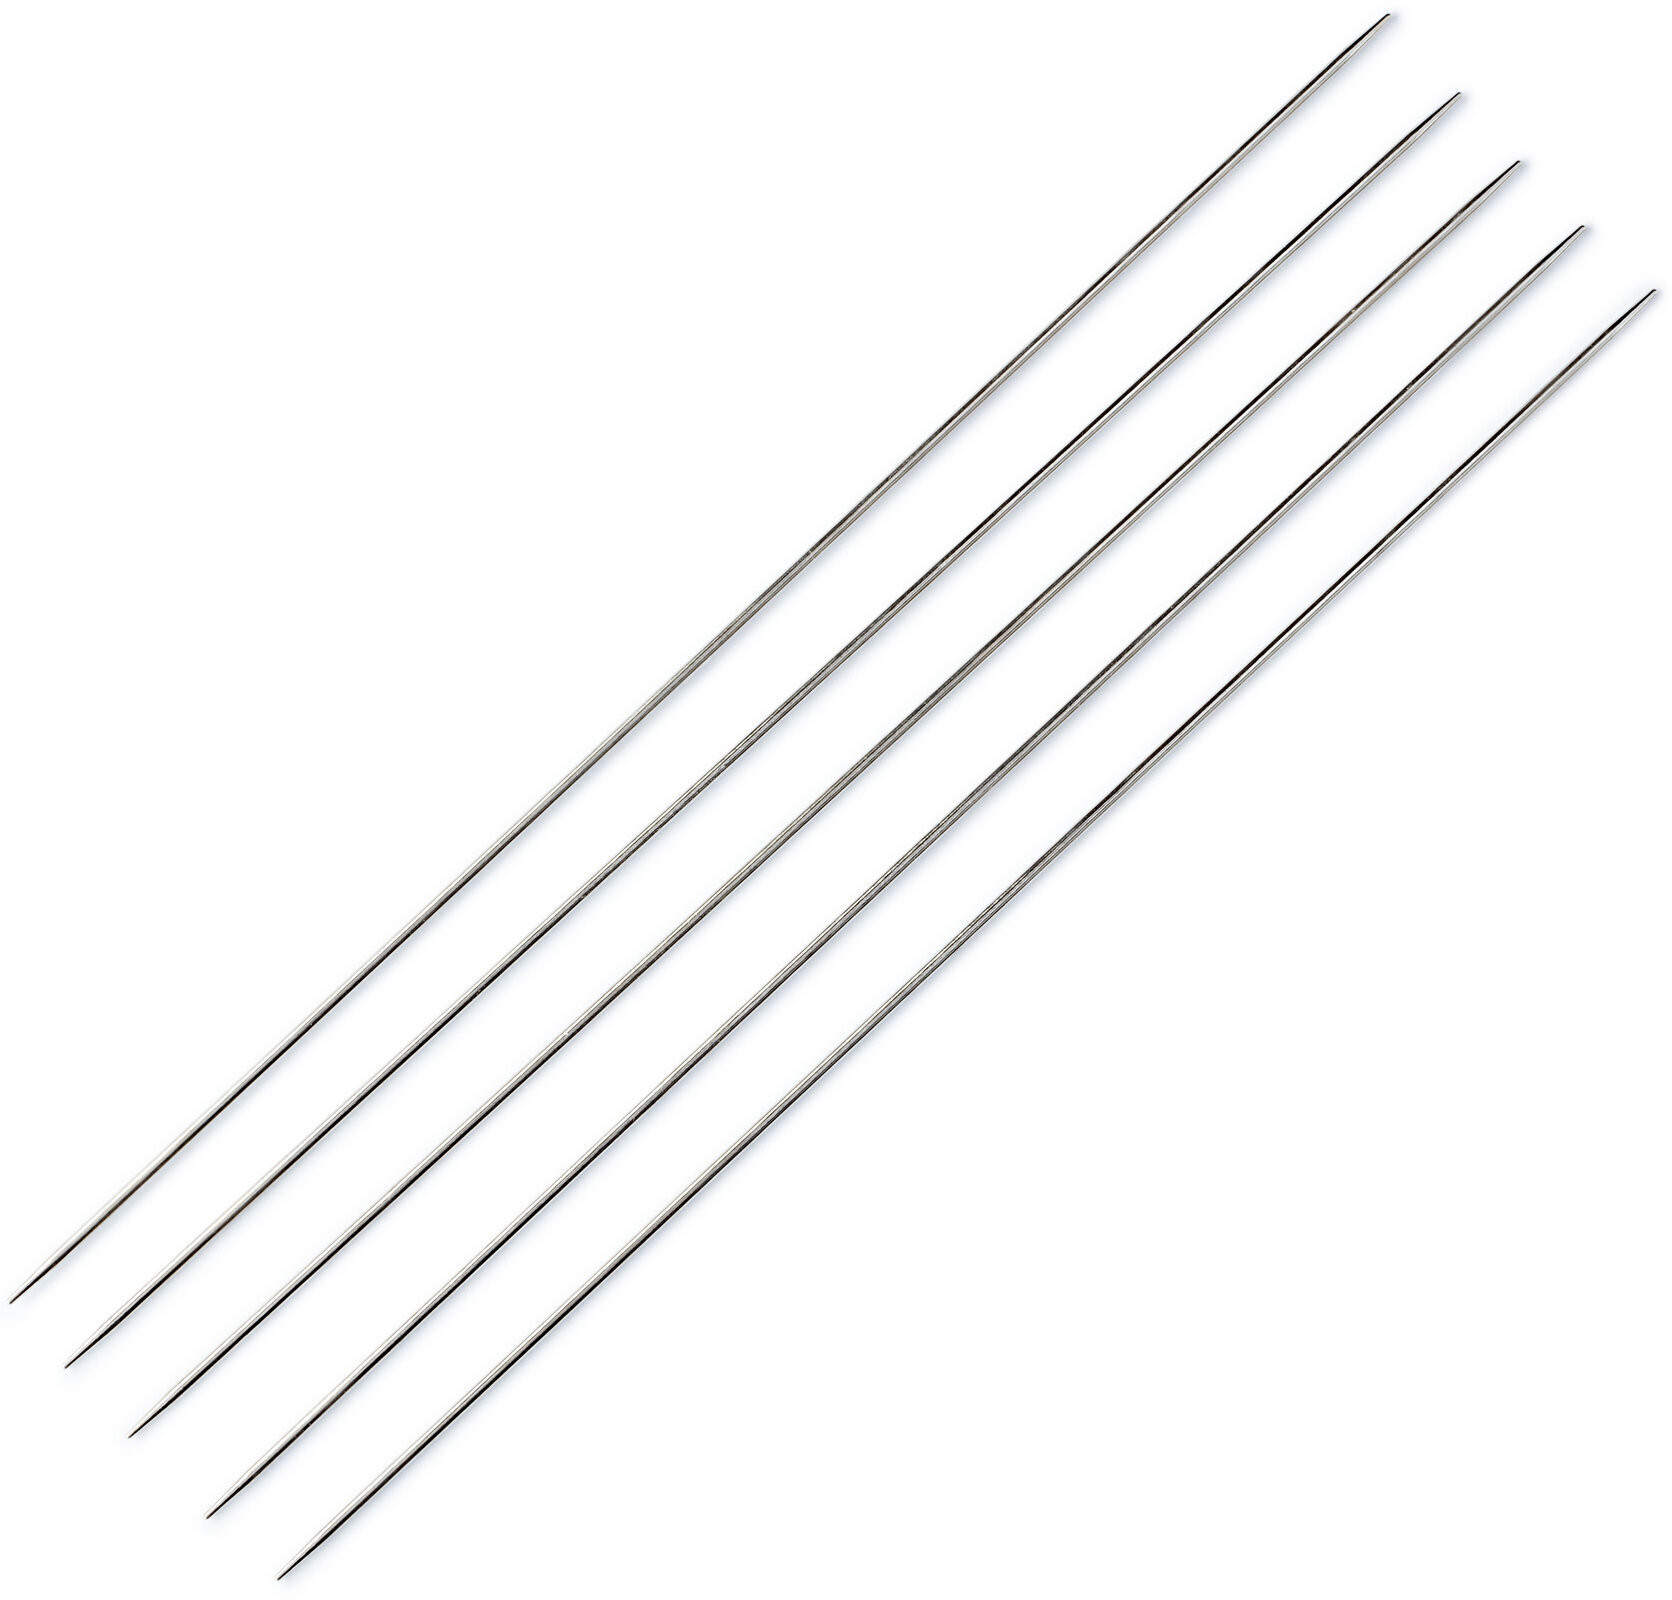 PRYM PRYM Double-Pointed Knitting Needles 20cm / 1,5mm